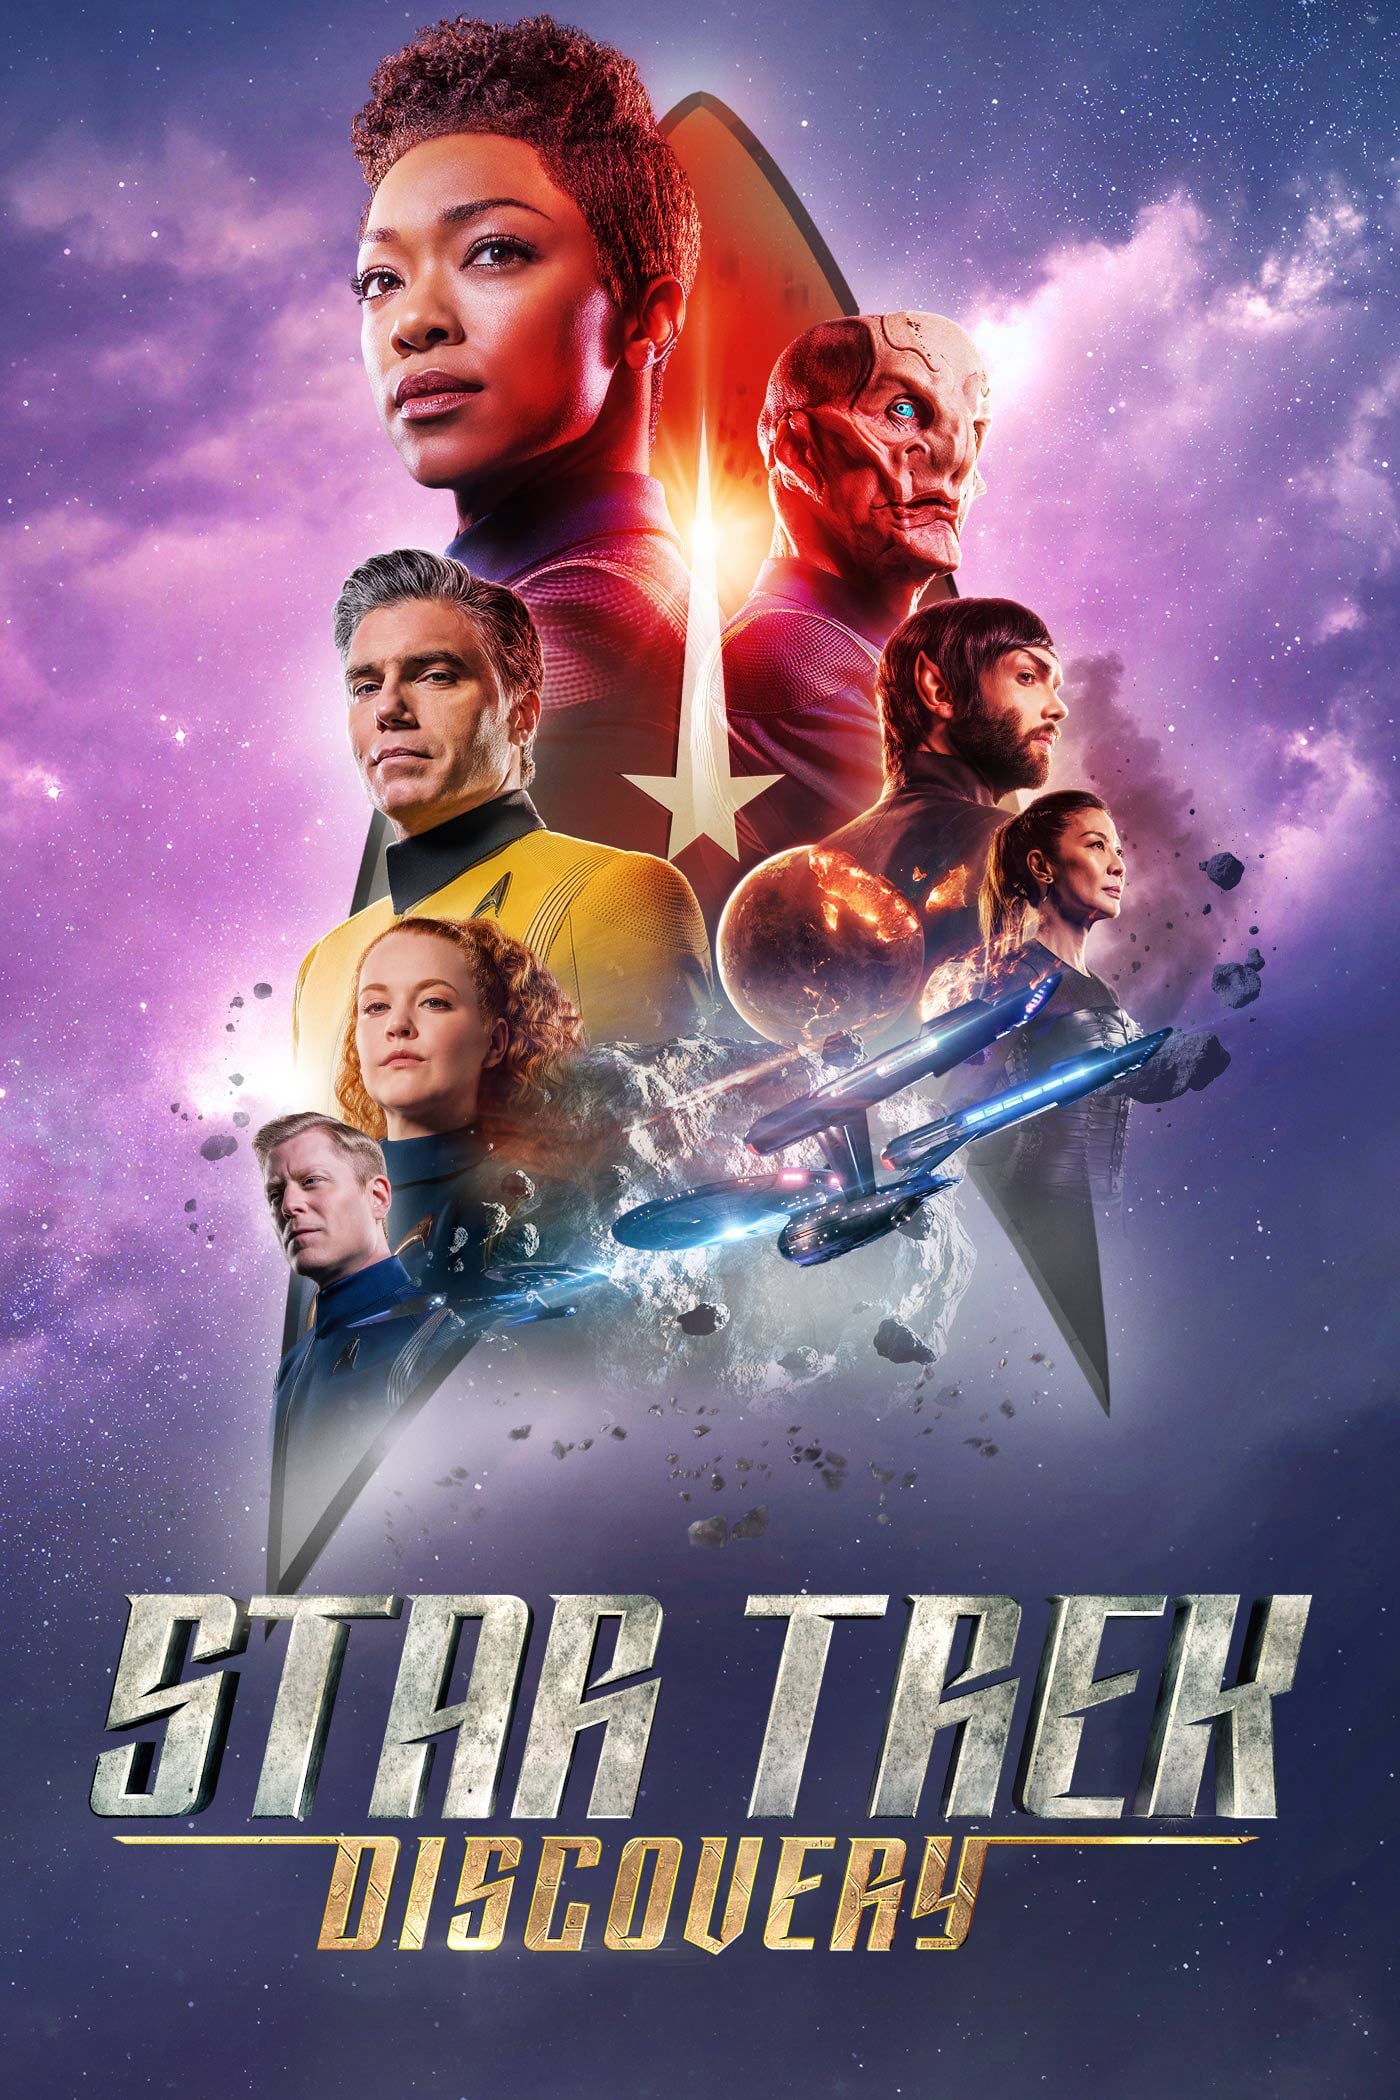 Star Trek: Discovery second season 2019